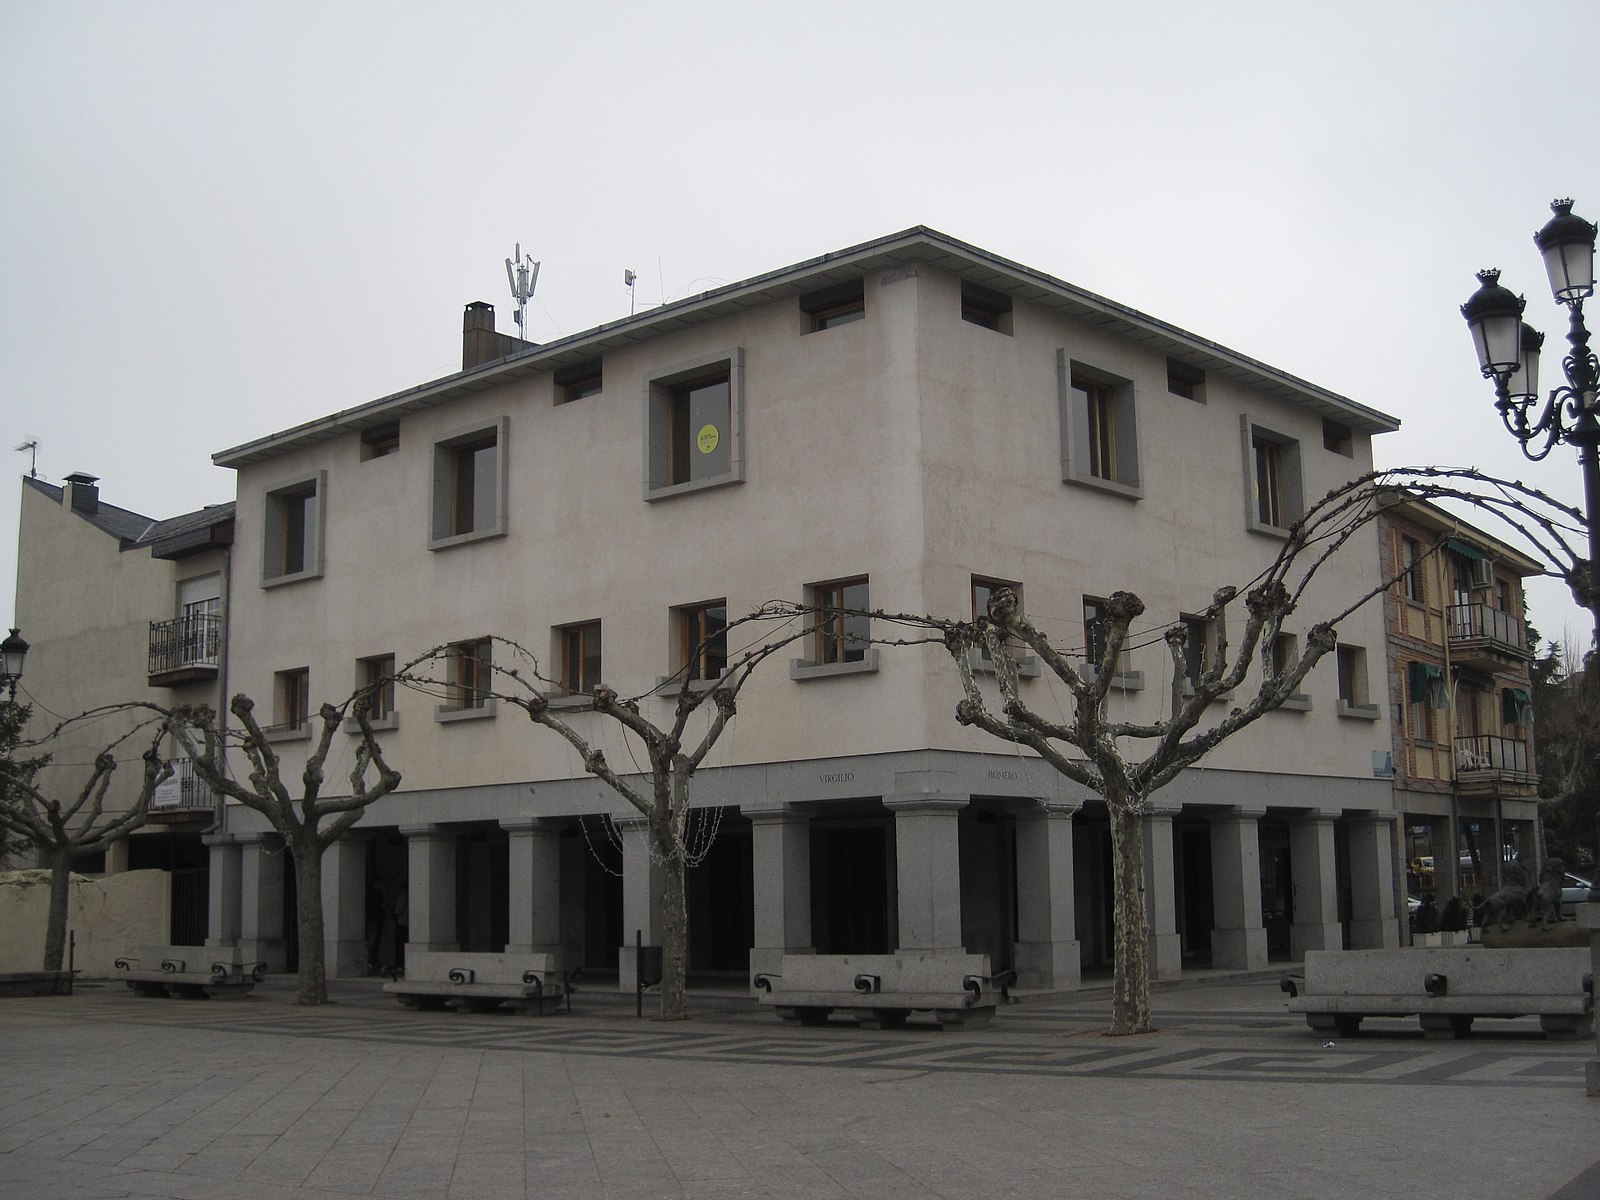 Biblioteca municipal